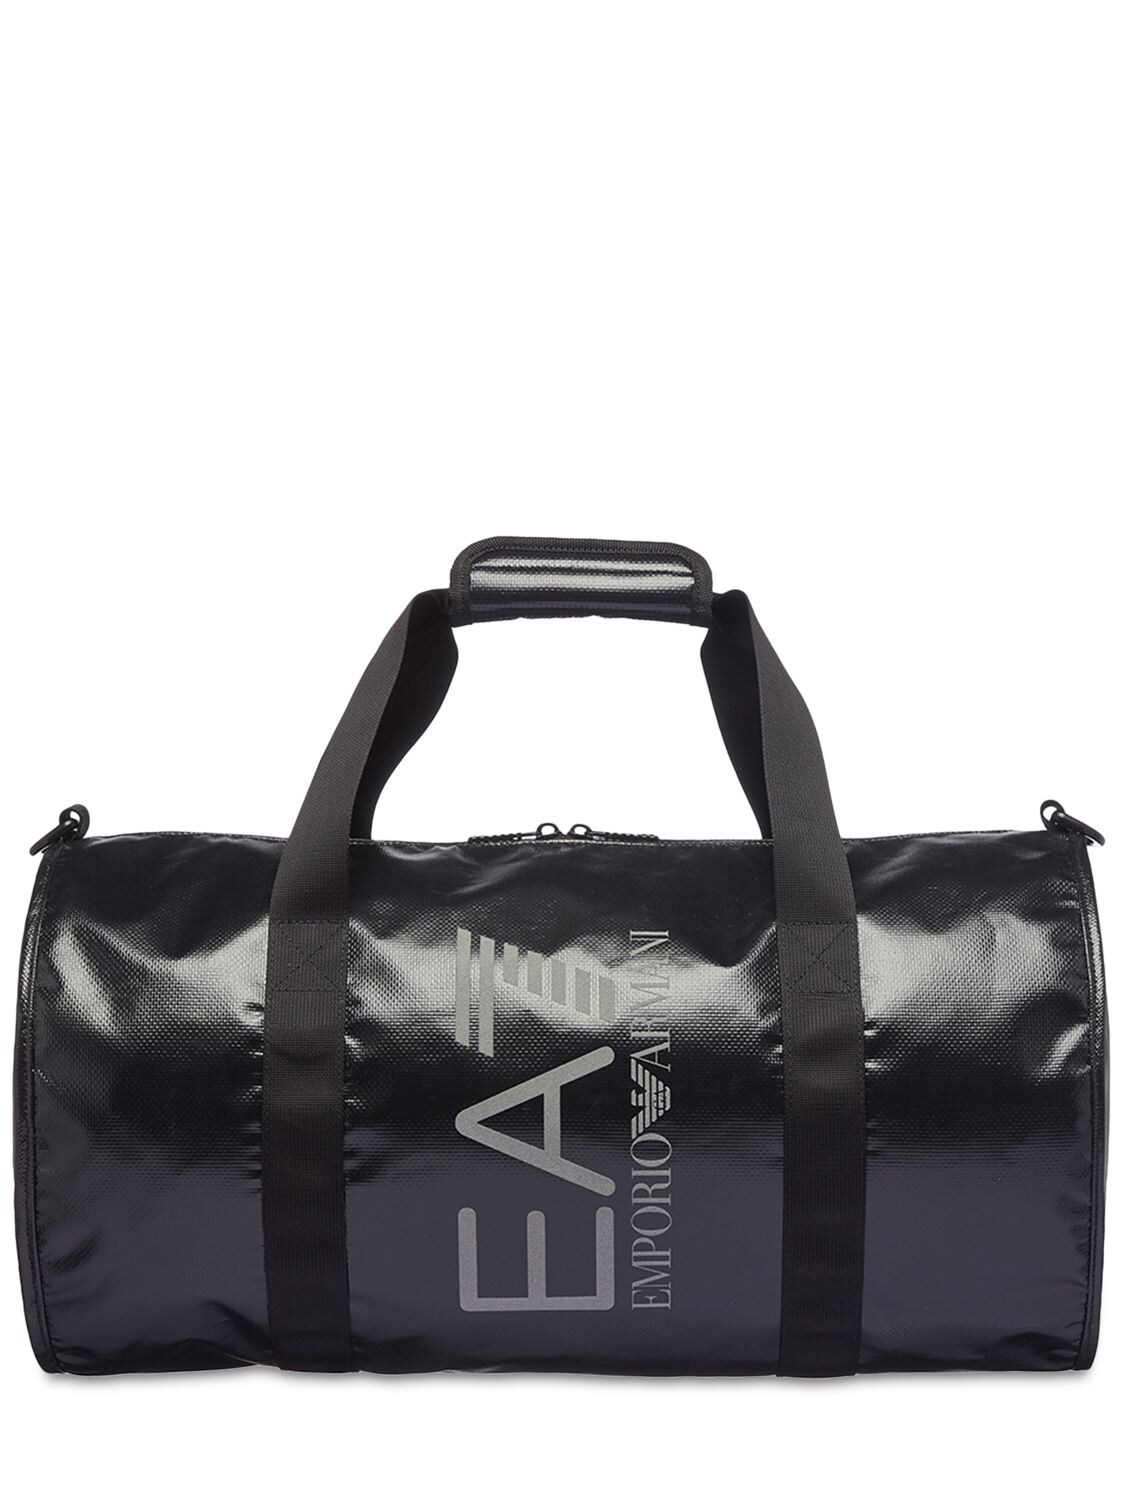 Ea7 25l Train Core Gym Bag In Black